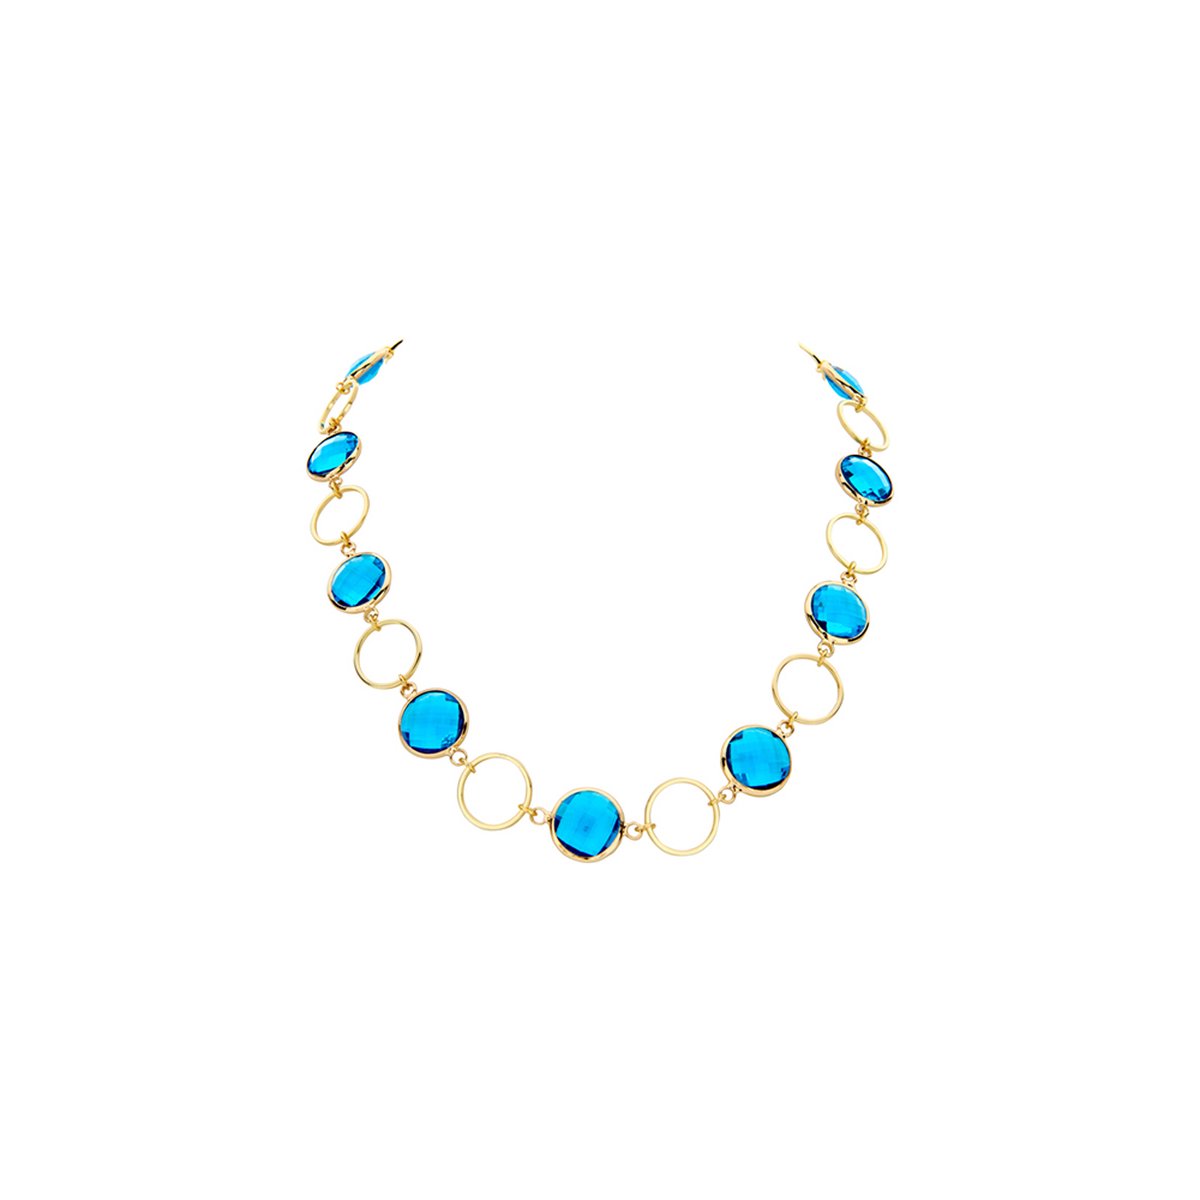 Les Cordes - Halsketting - Collier - DANIS - Kleur Blauw - Metaal - Sieraad Dames - Juwelen - Statement ketting